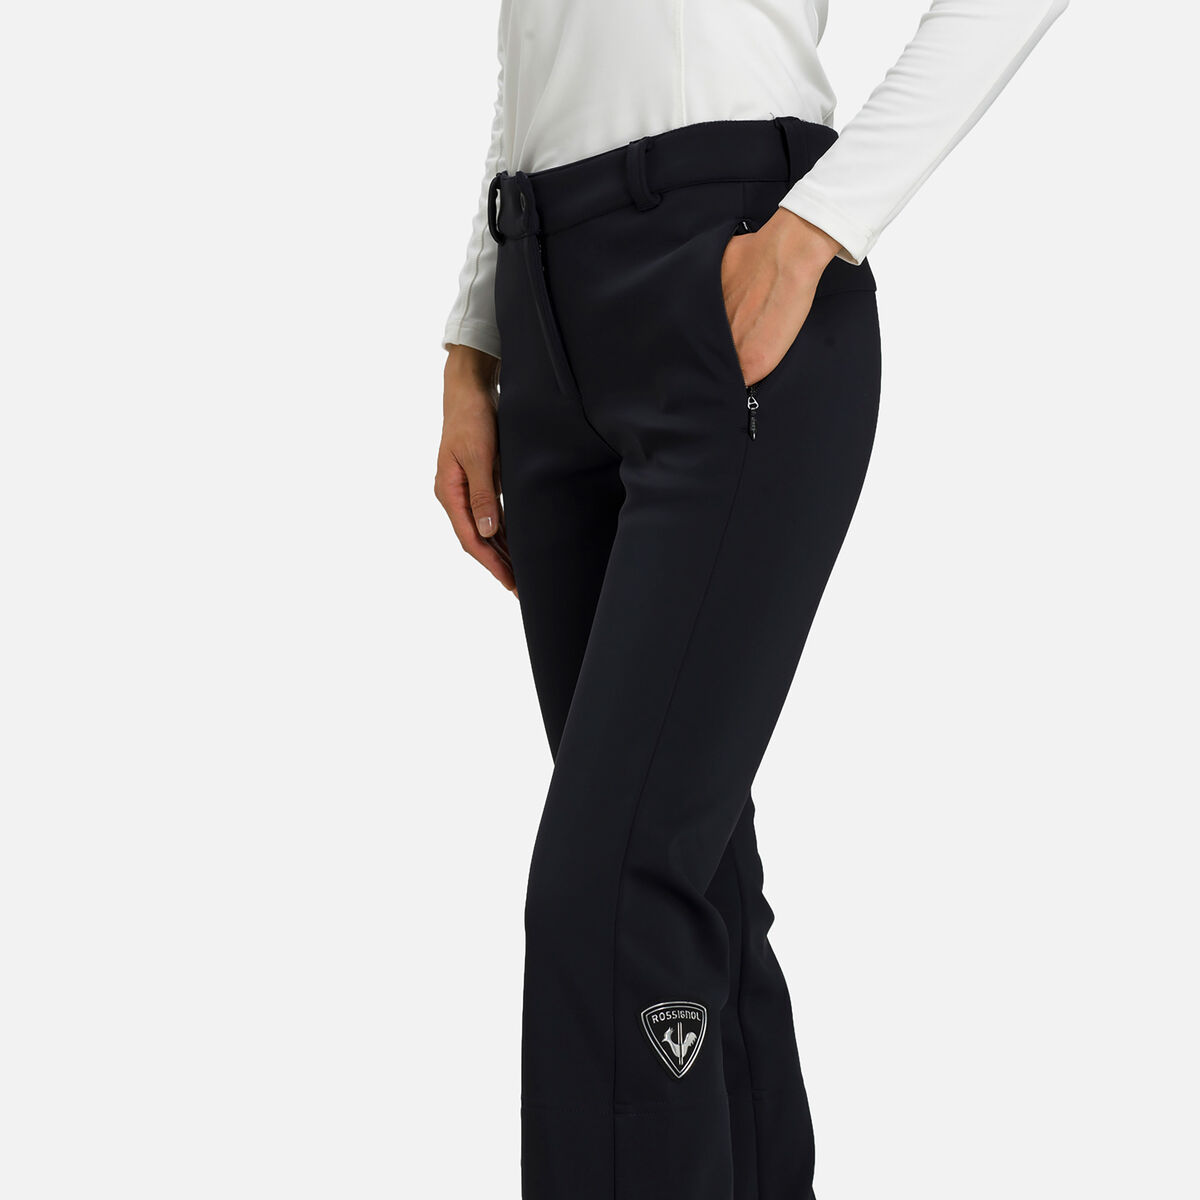 Rossignol Women's Softshell Ski pants black